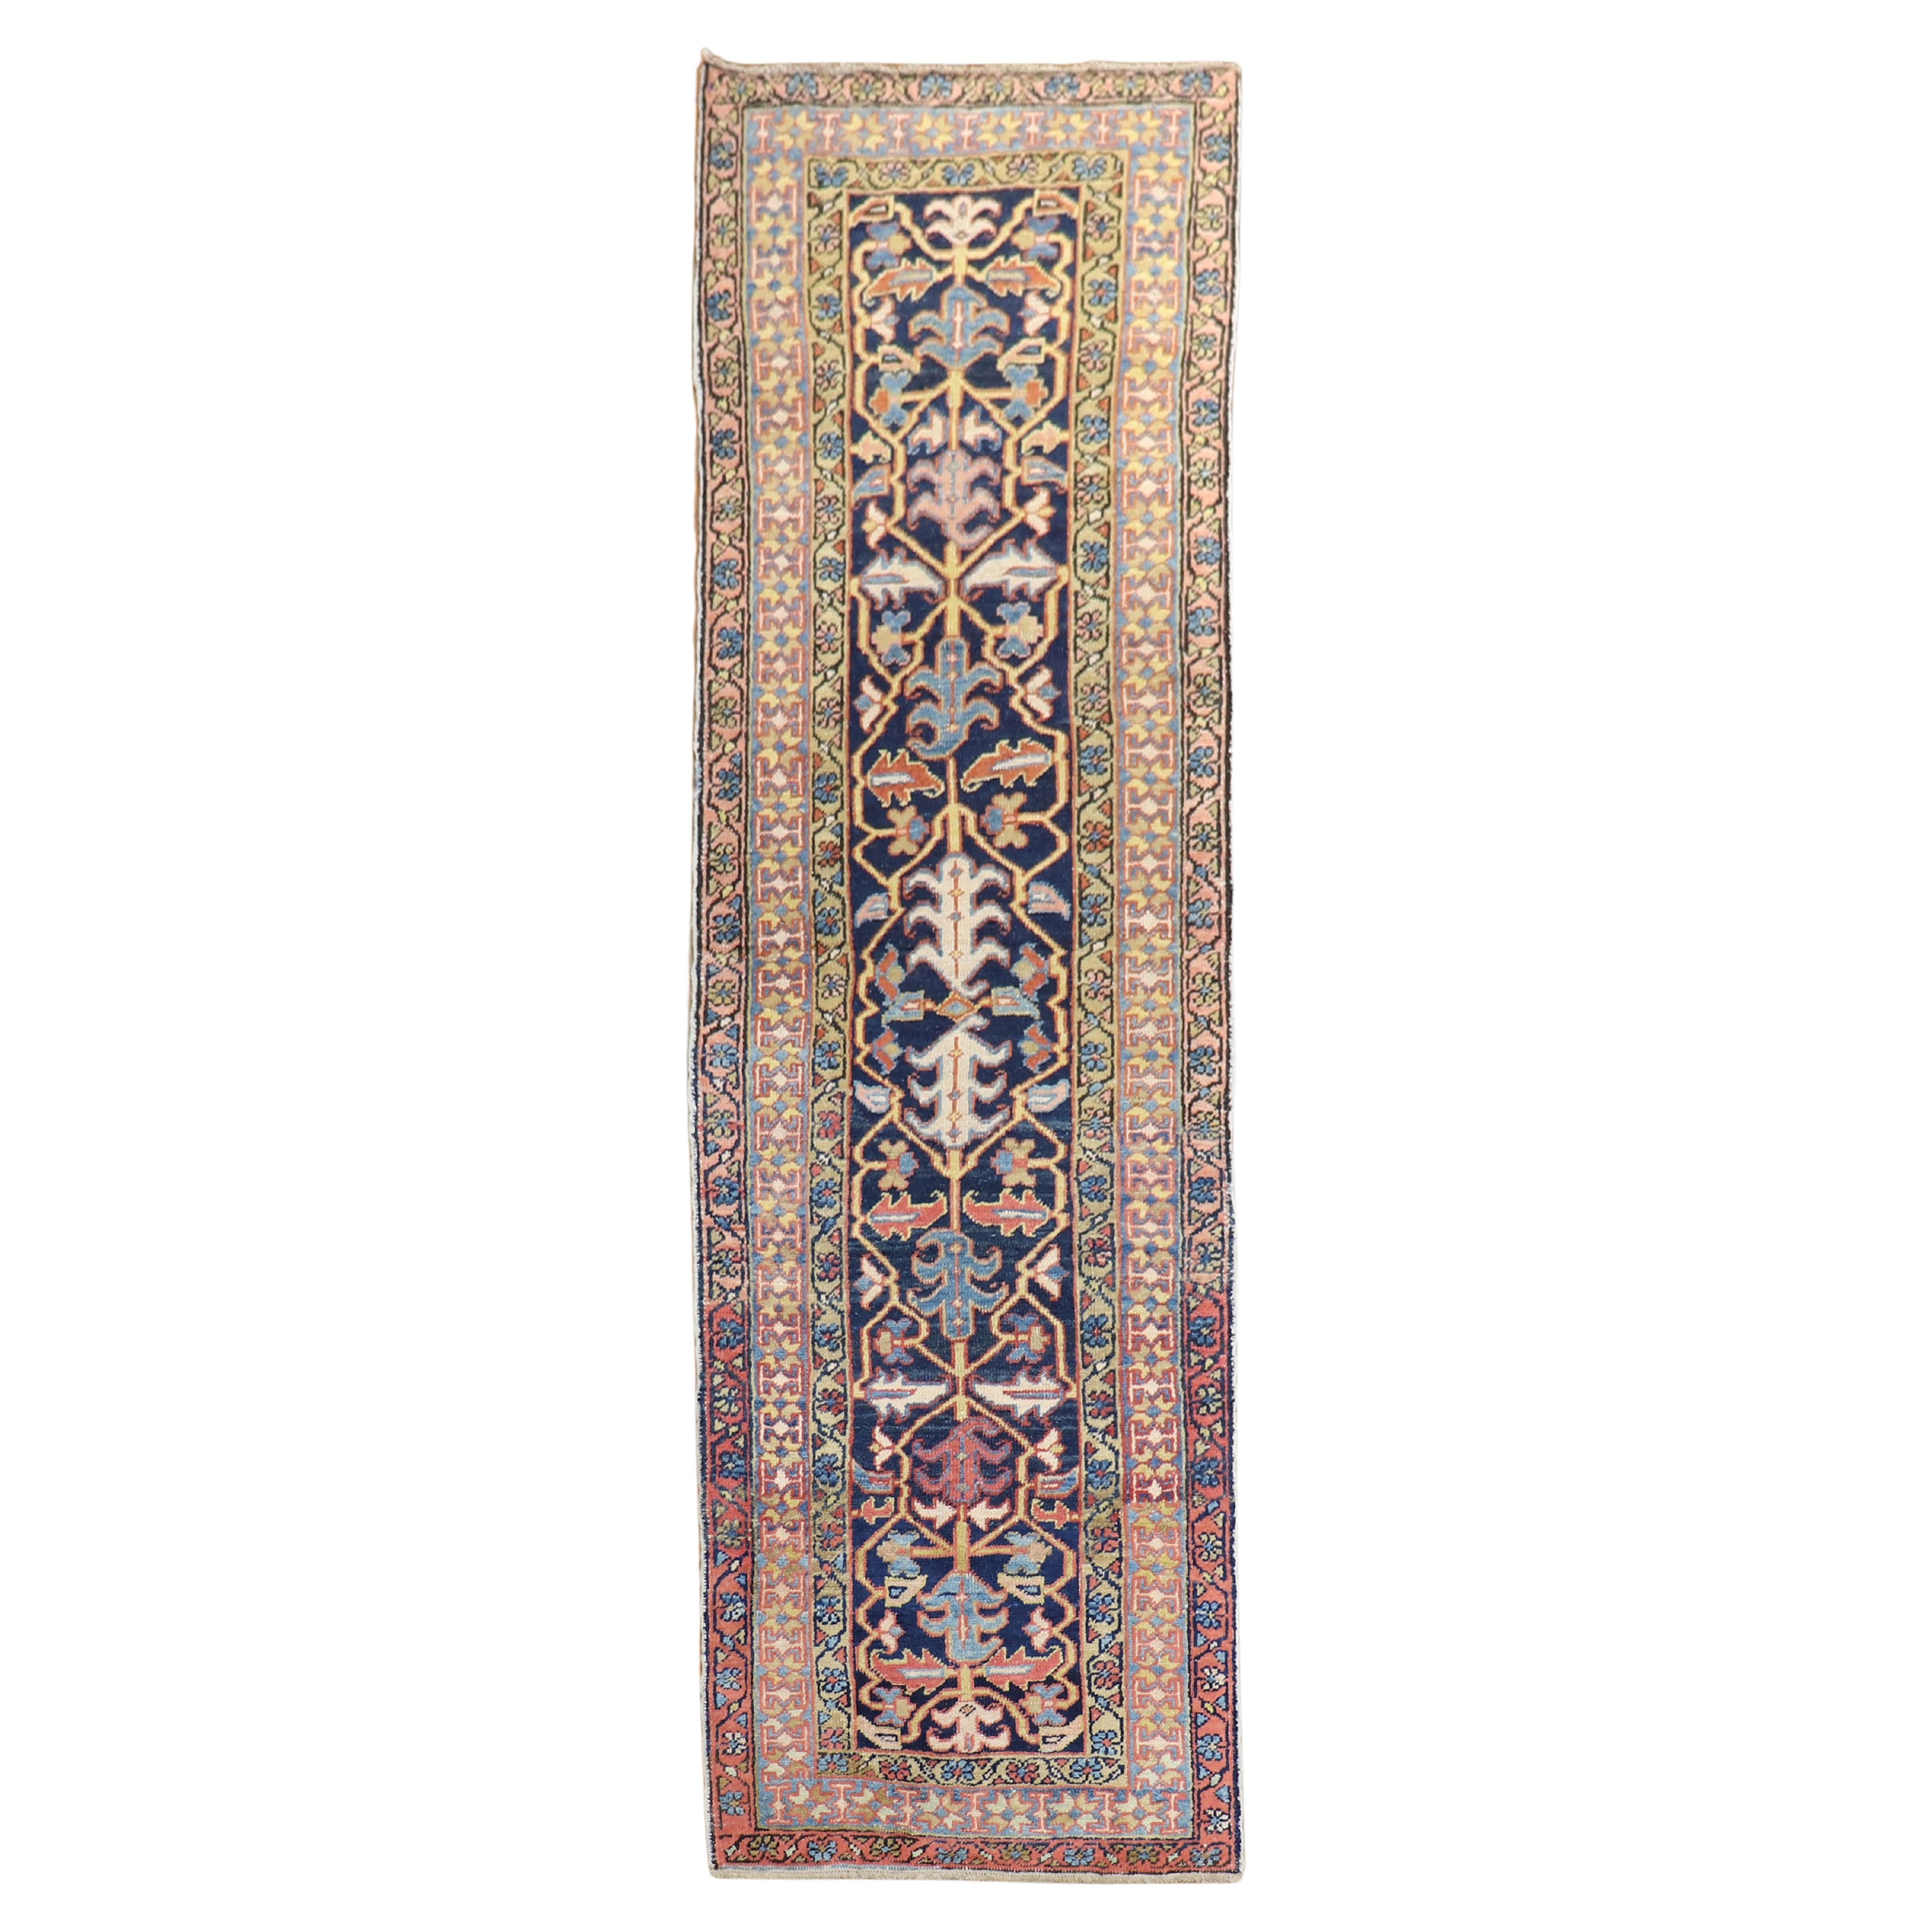  Antique Persian Heriz Runner For Sale